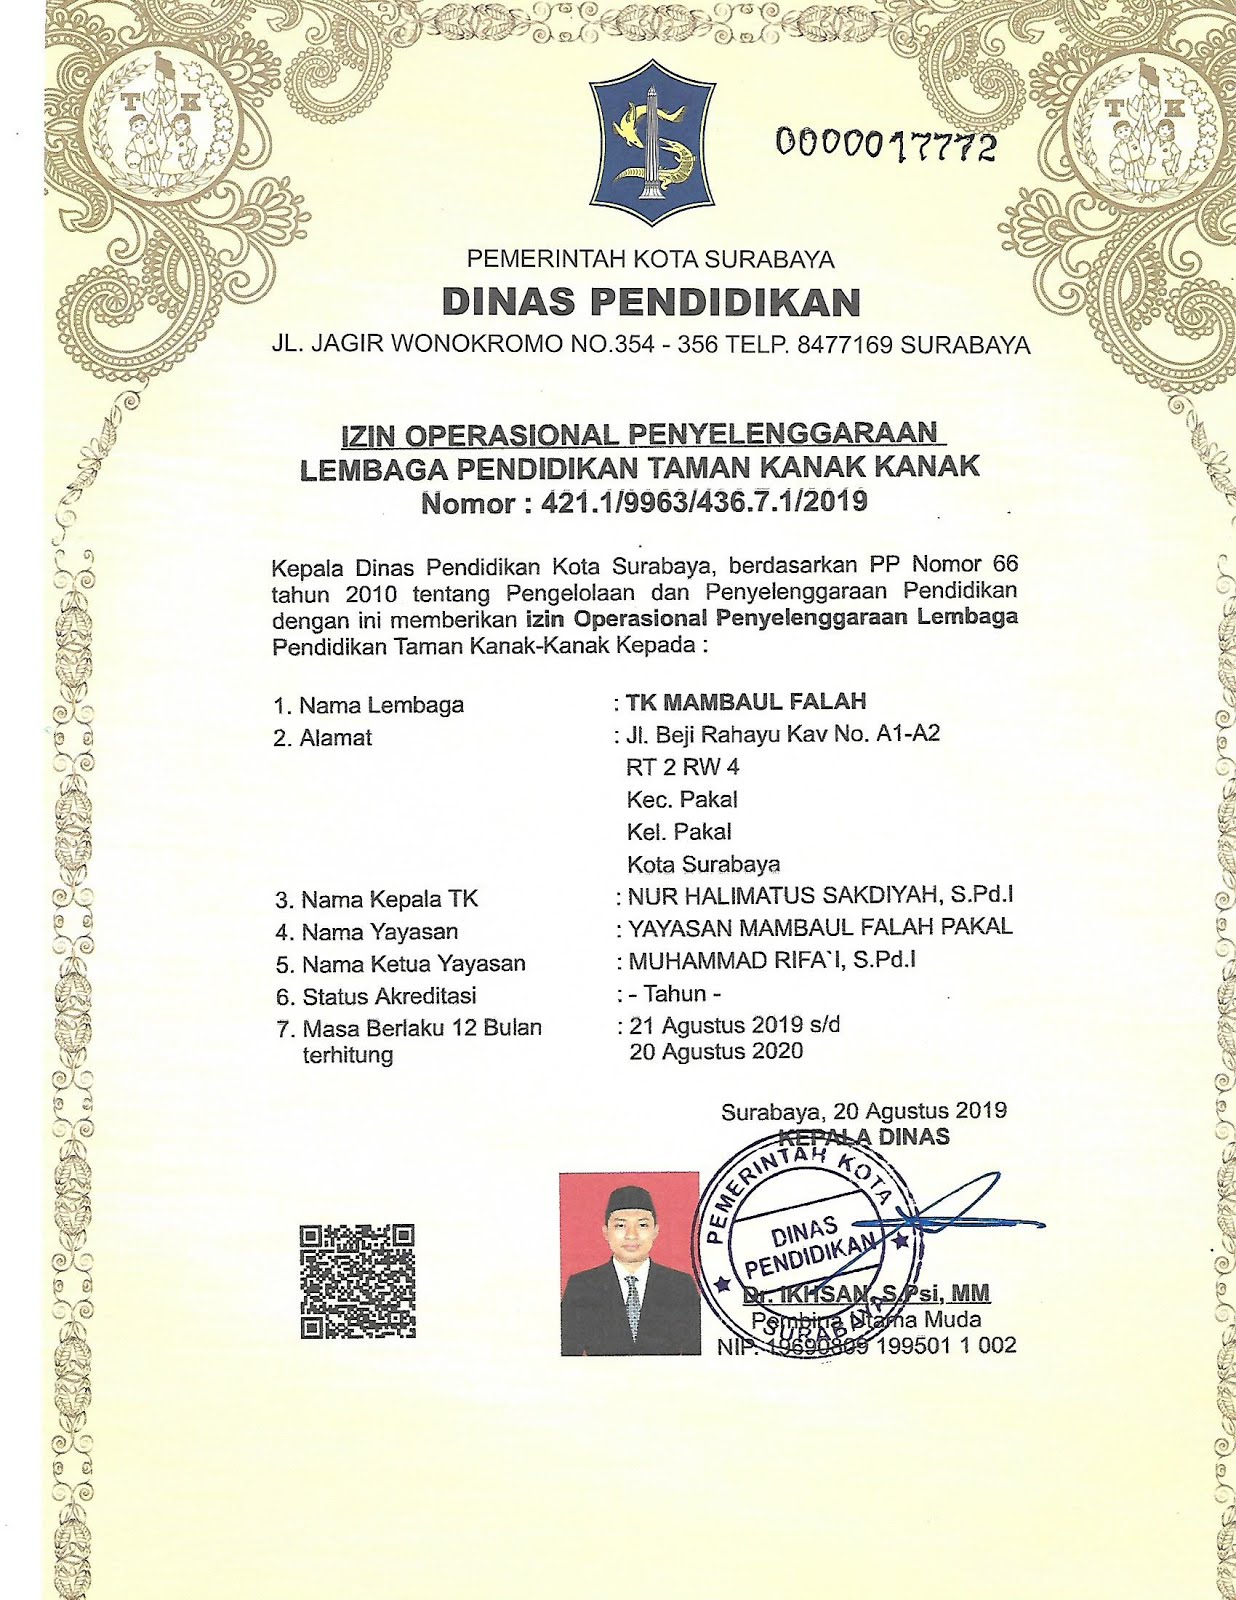 Sudah Terdaftar Dinas Prndidikan Surabaya